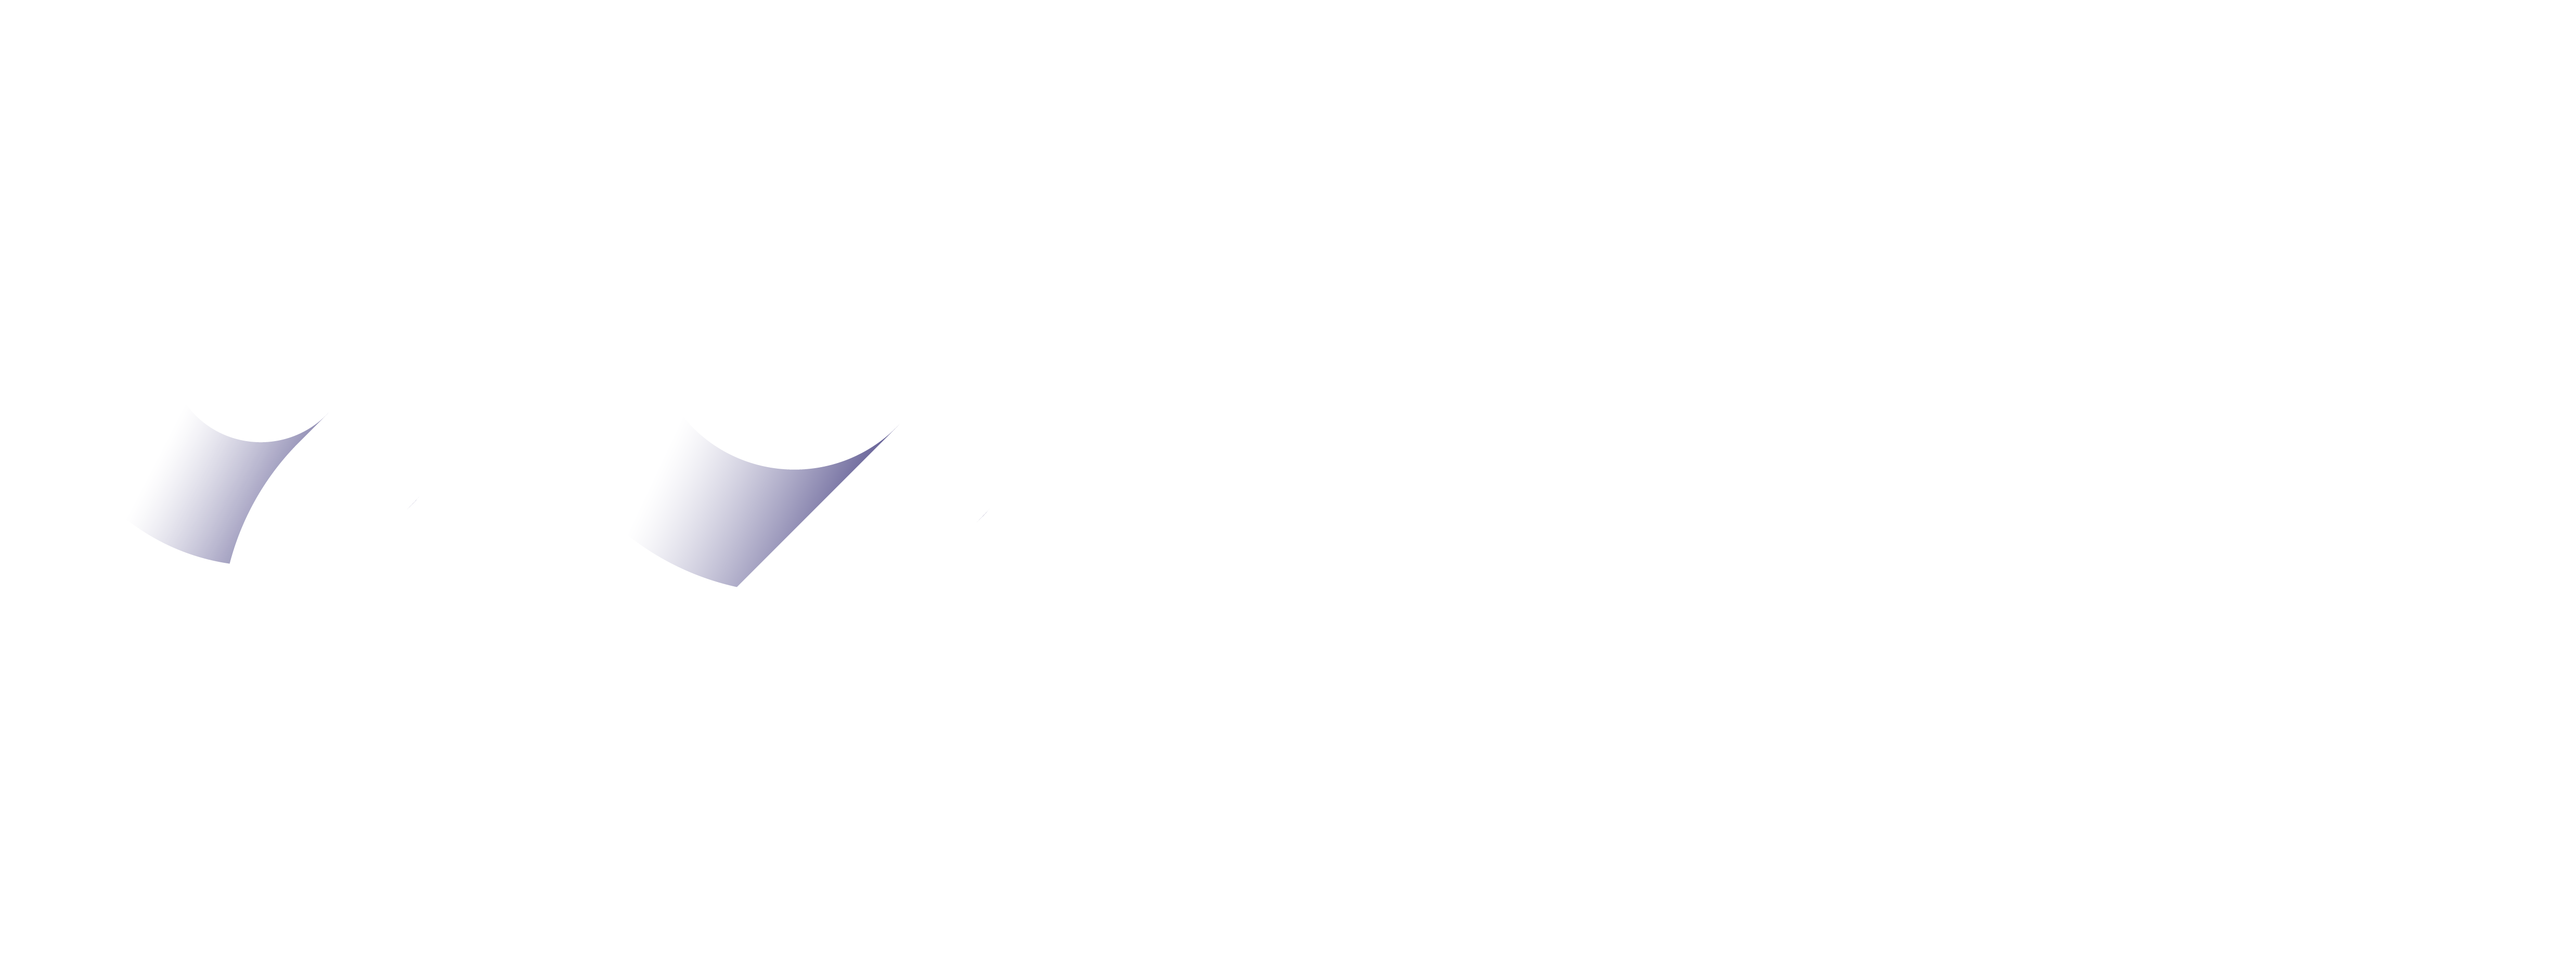 ViewProd